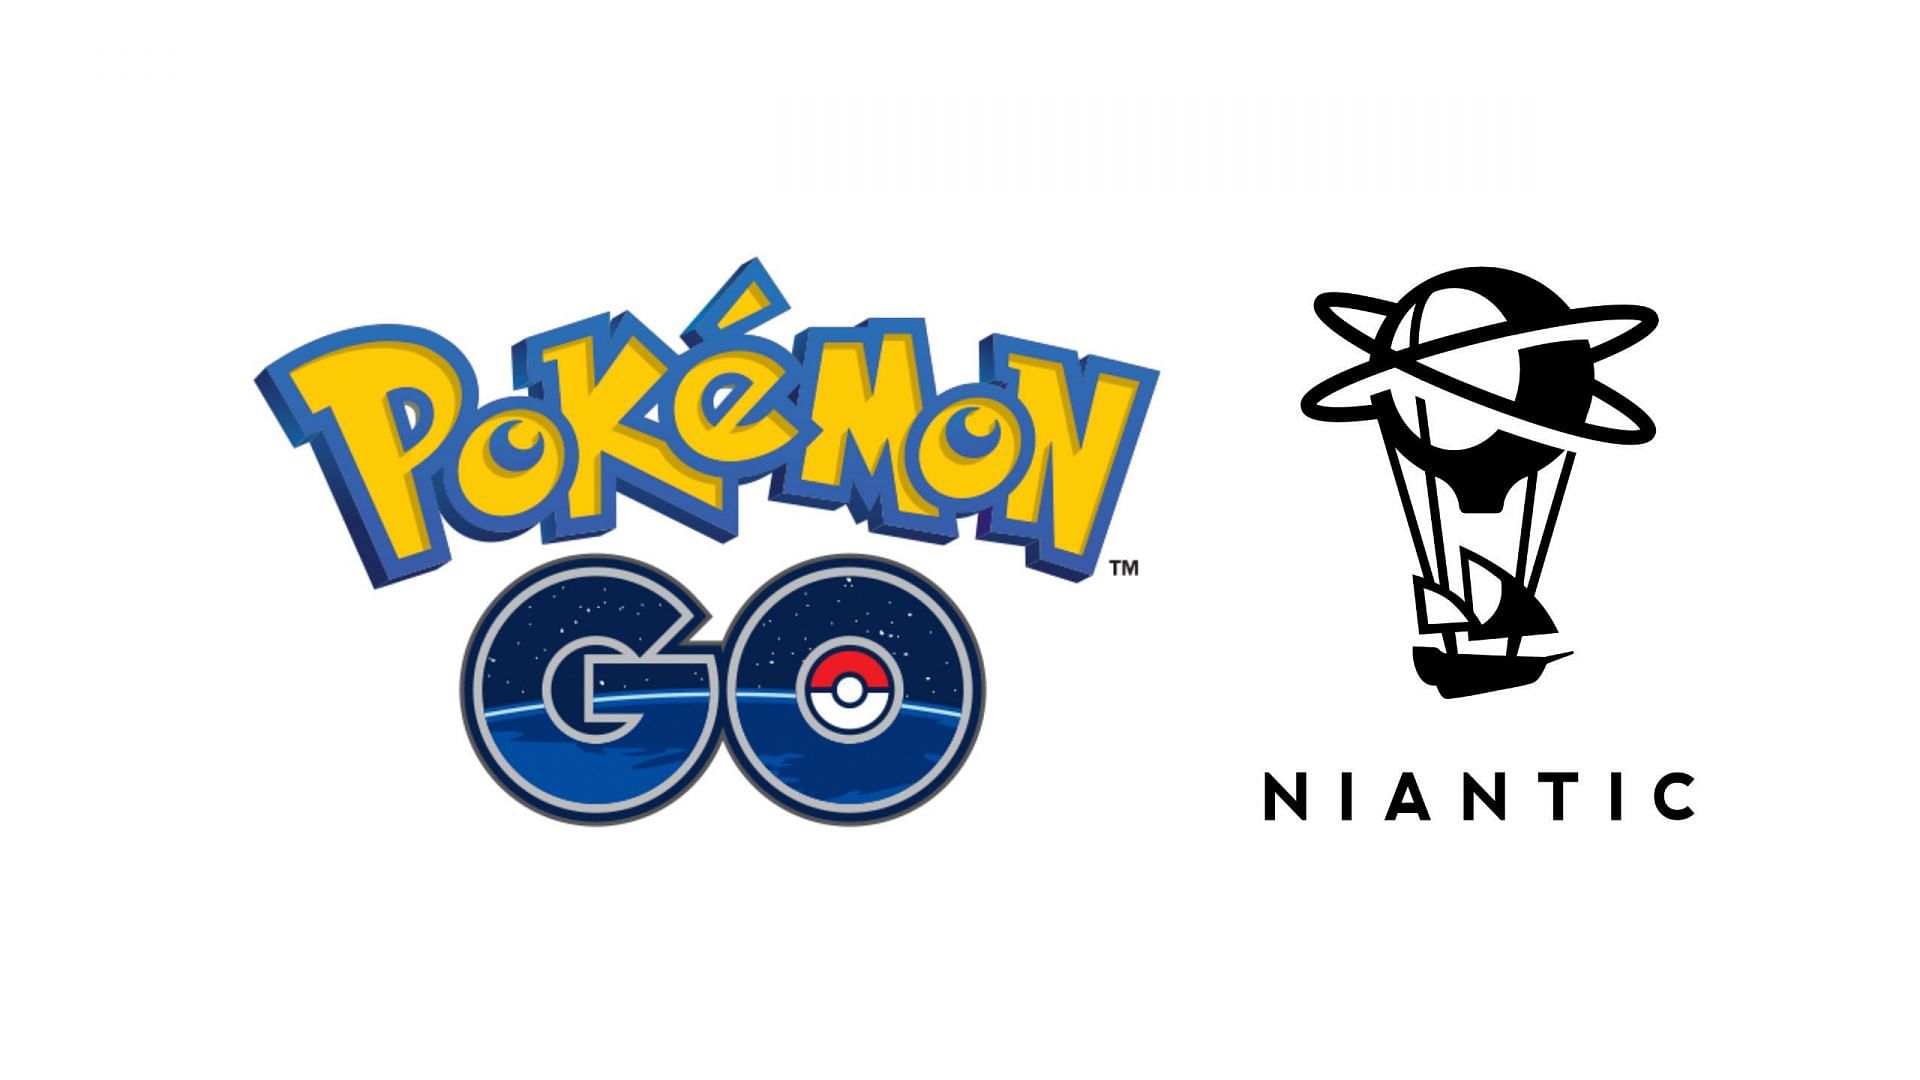 Pokemon GO and Niantic logo. (Image via Niantic)